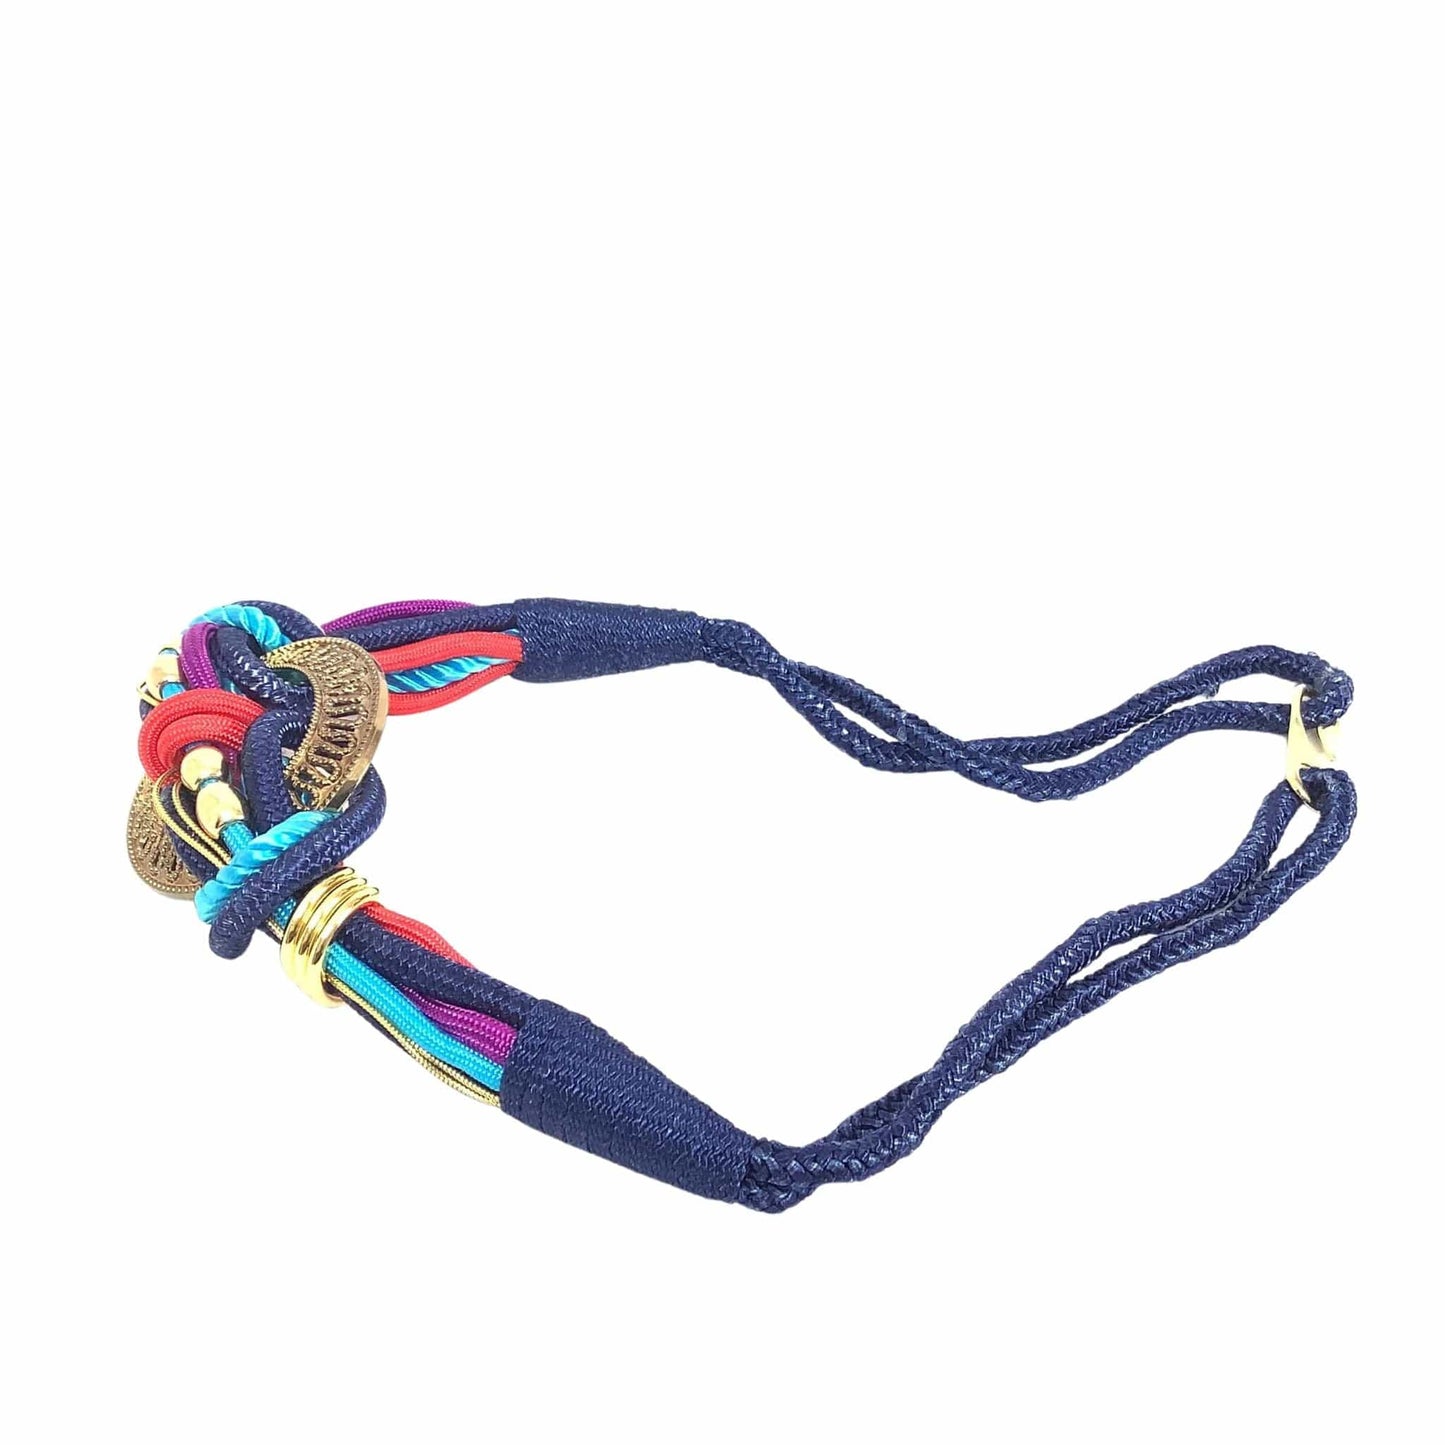 1980s Colorful Rope Belt Medium / Multi / Vintage 1980s